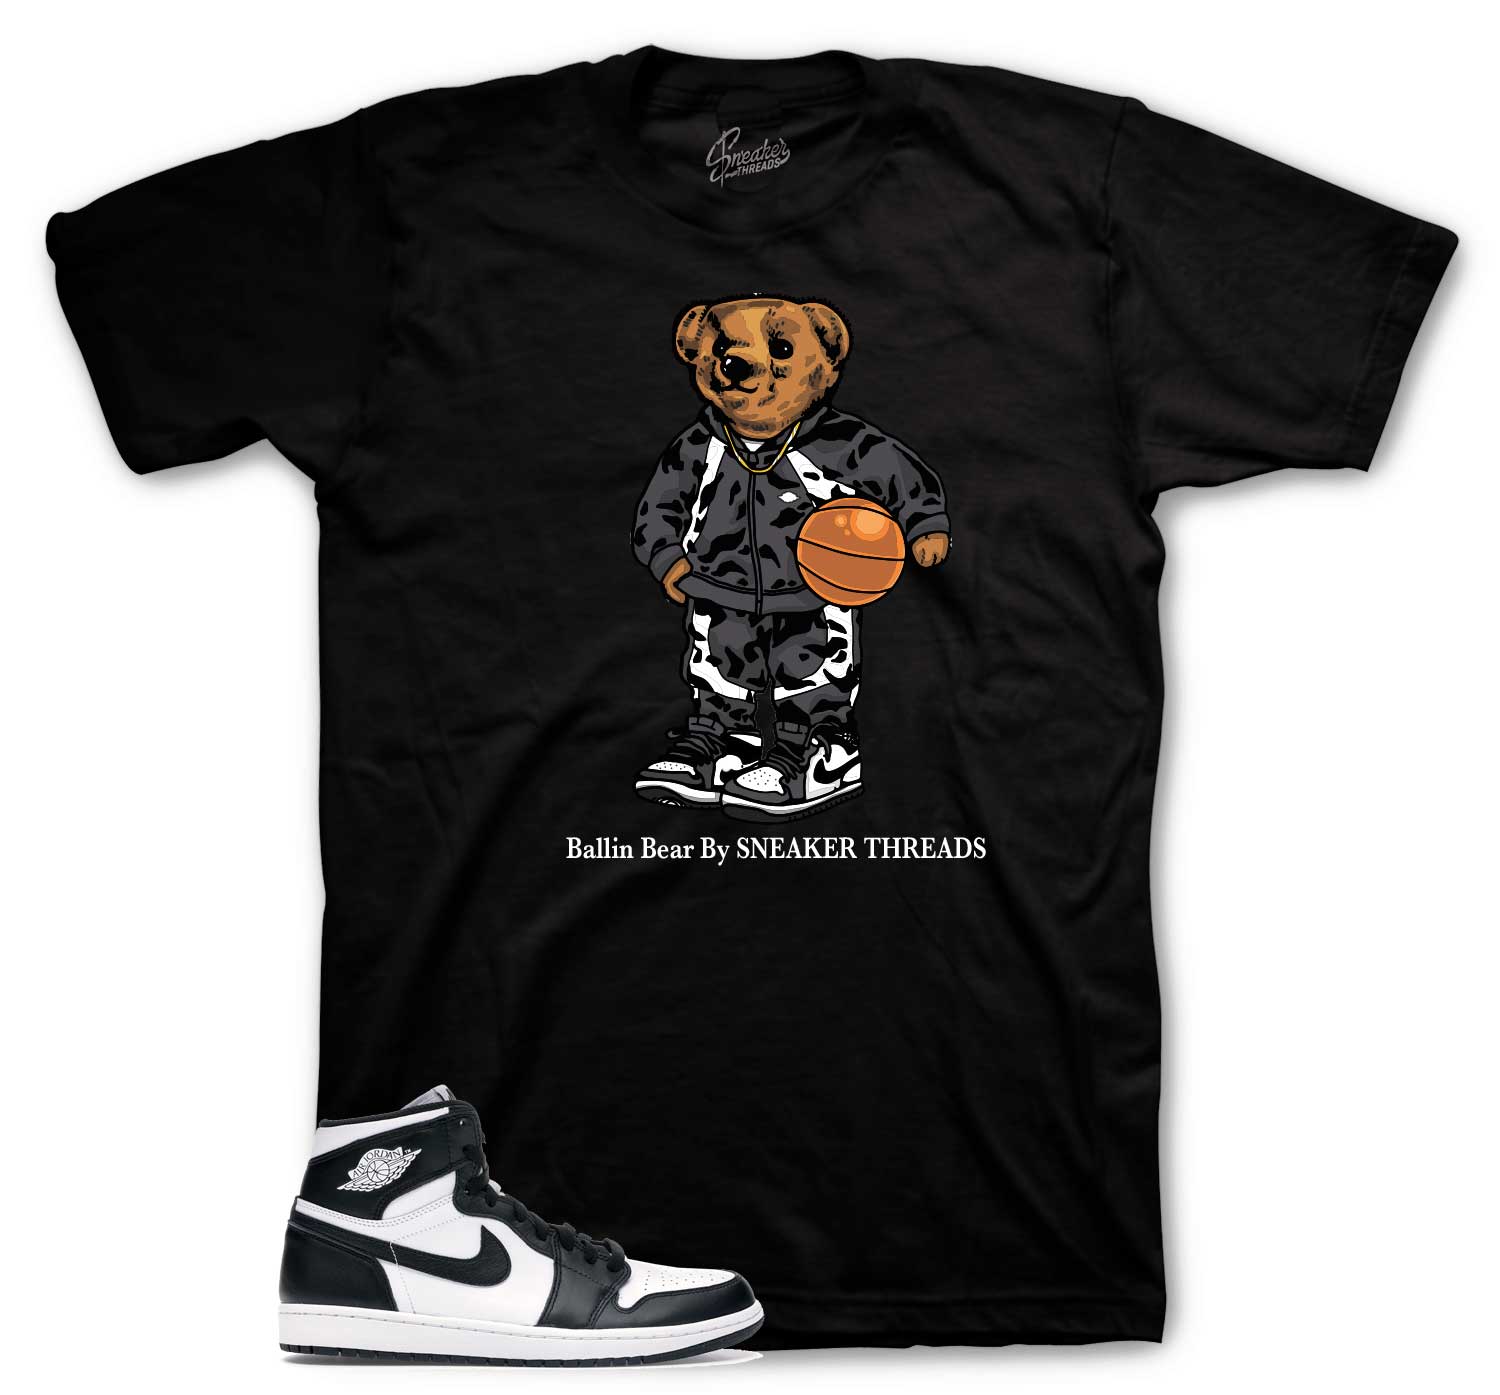 Retro 1 Black And White Shirt - Ballin Bear - Black